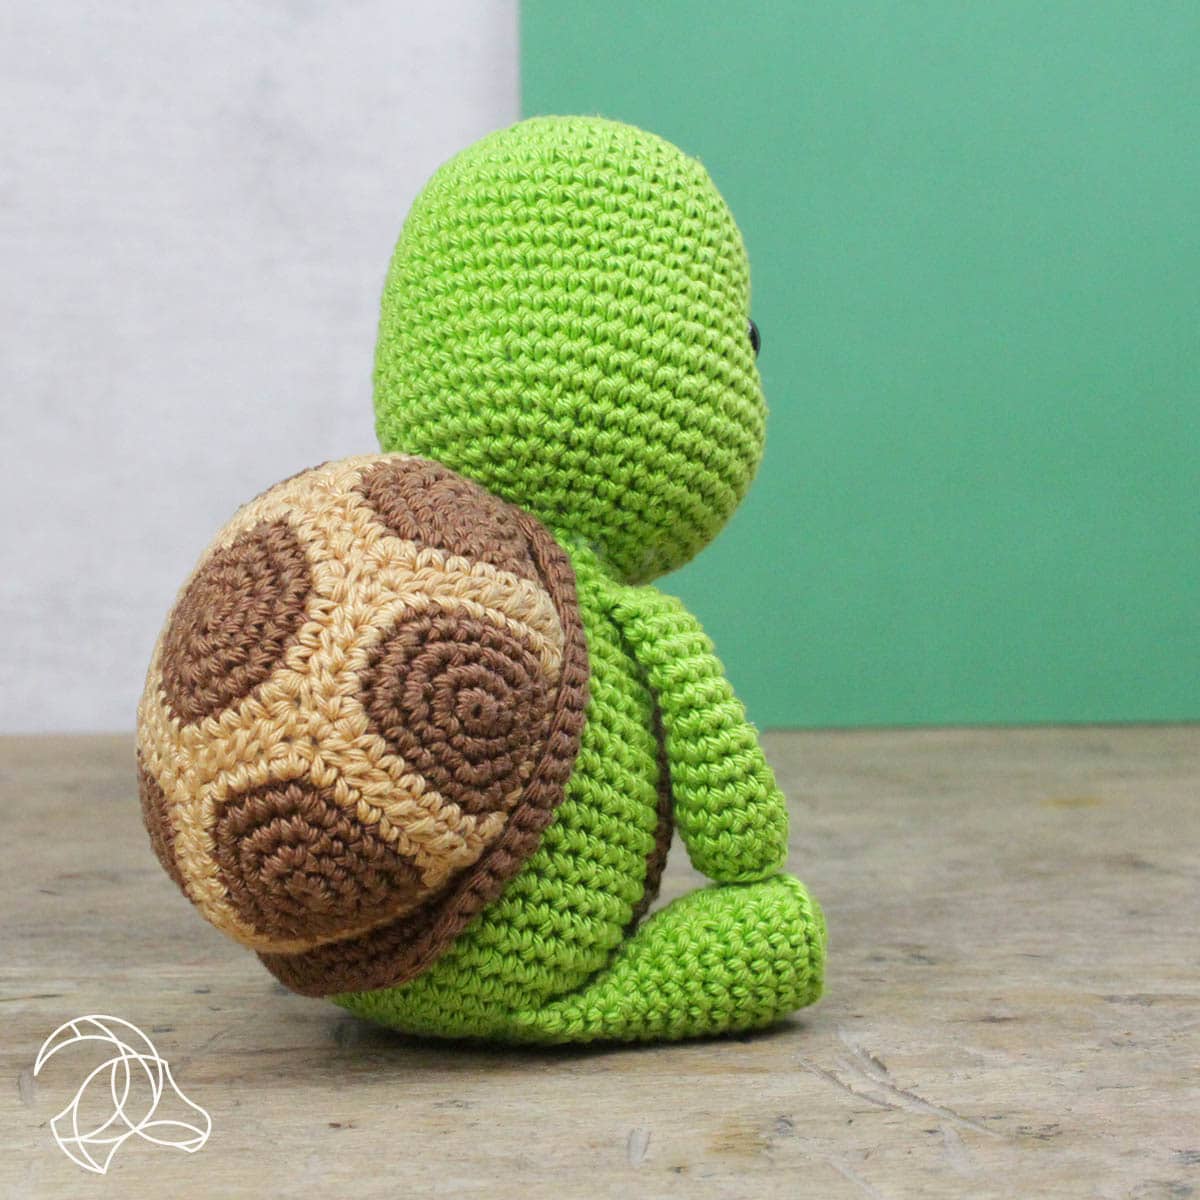 Hardicraft - DIY Crochet Kit - Siem Turtle